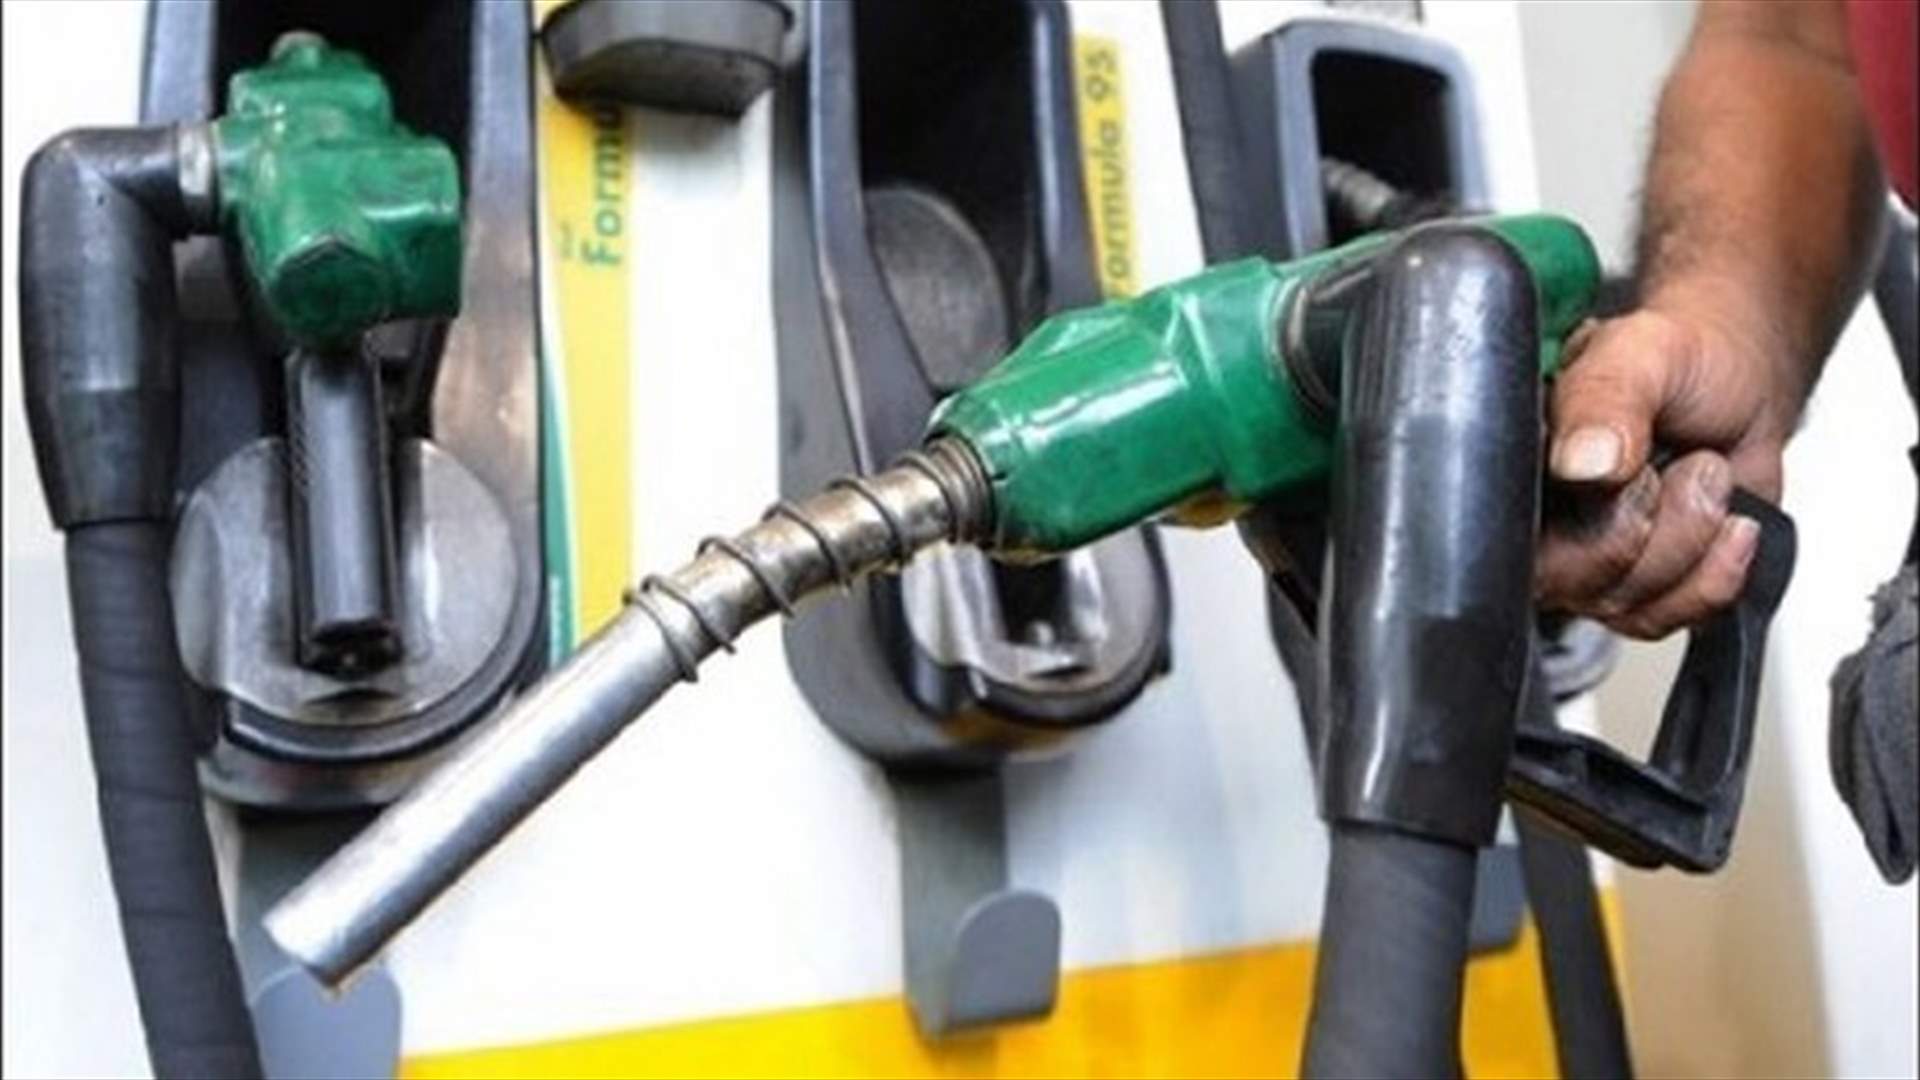 Price of 98 octane fuel drops 300 LBP